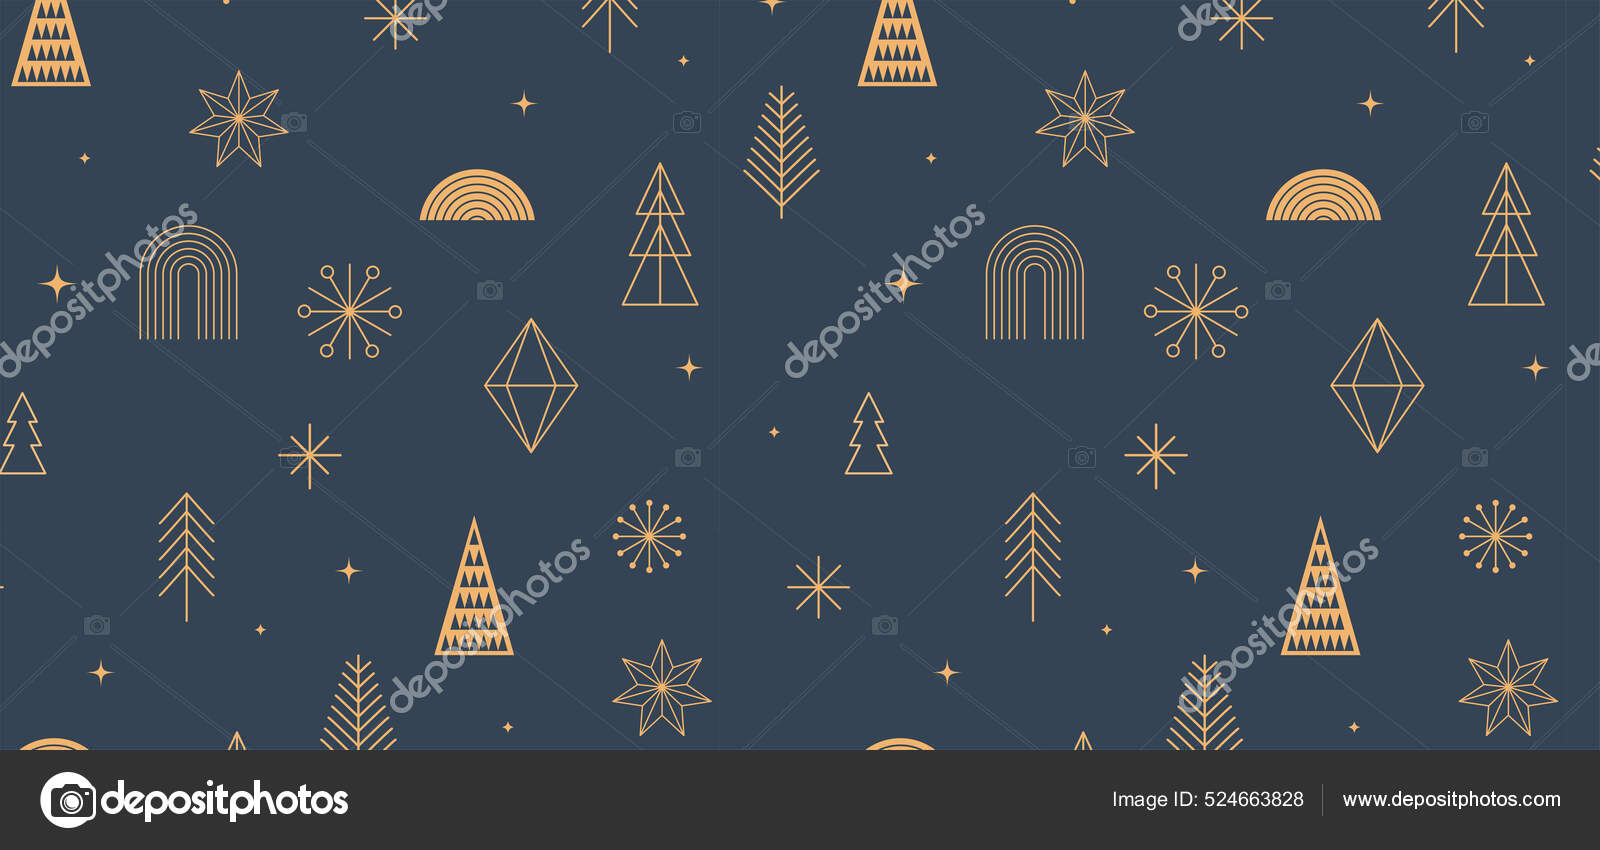 Simple Christmas background, golden geometric minimalist elements